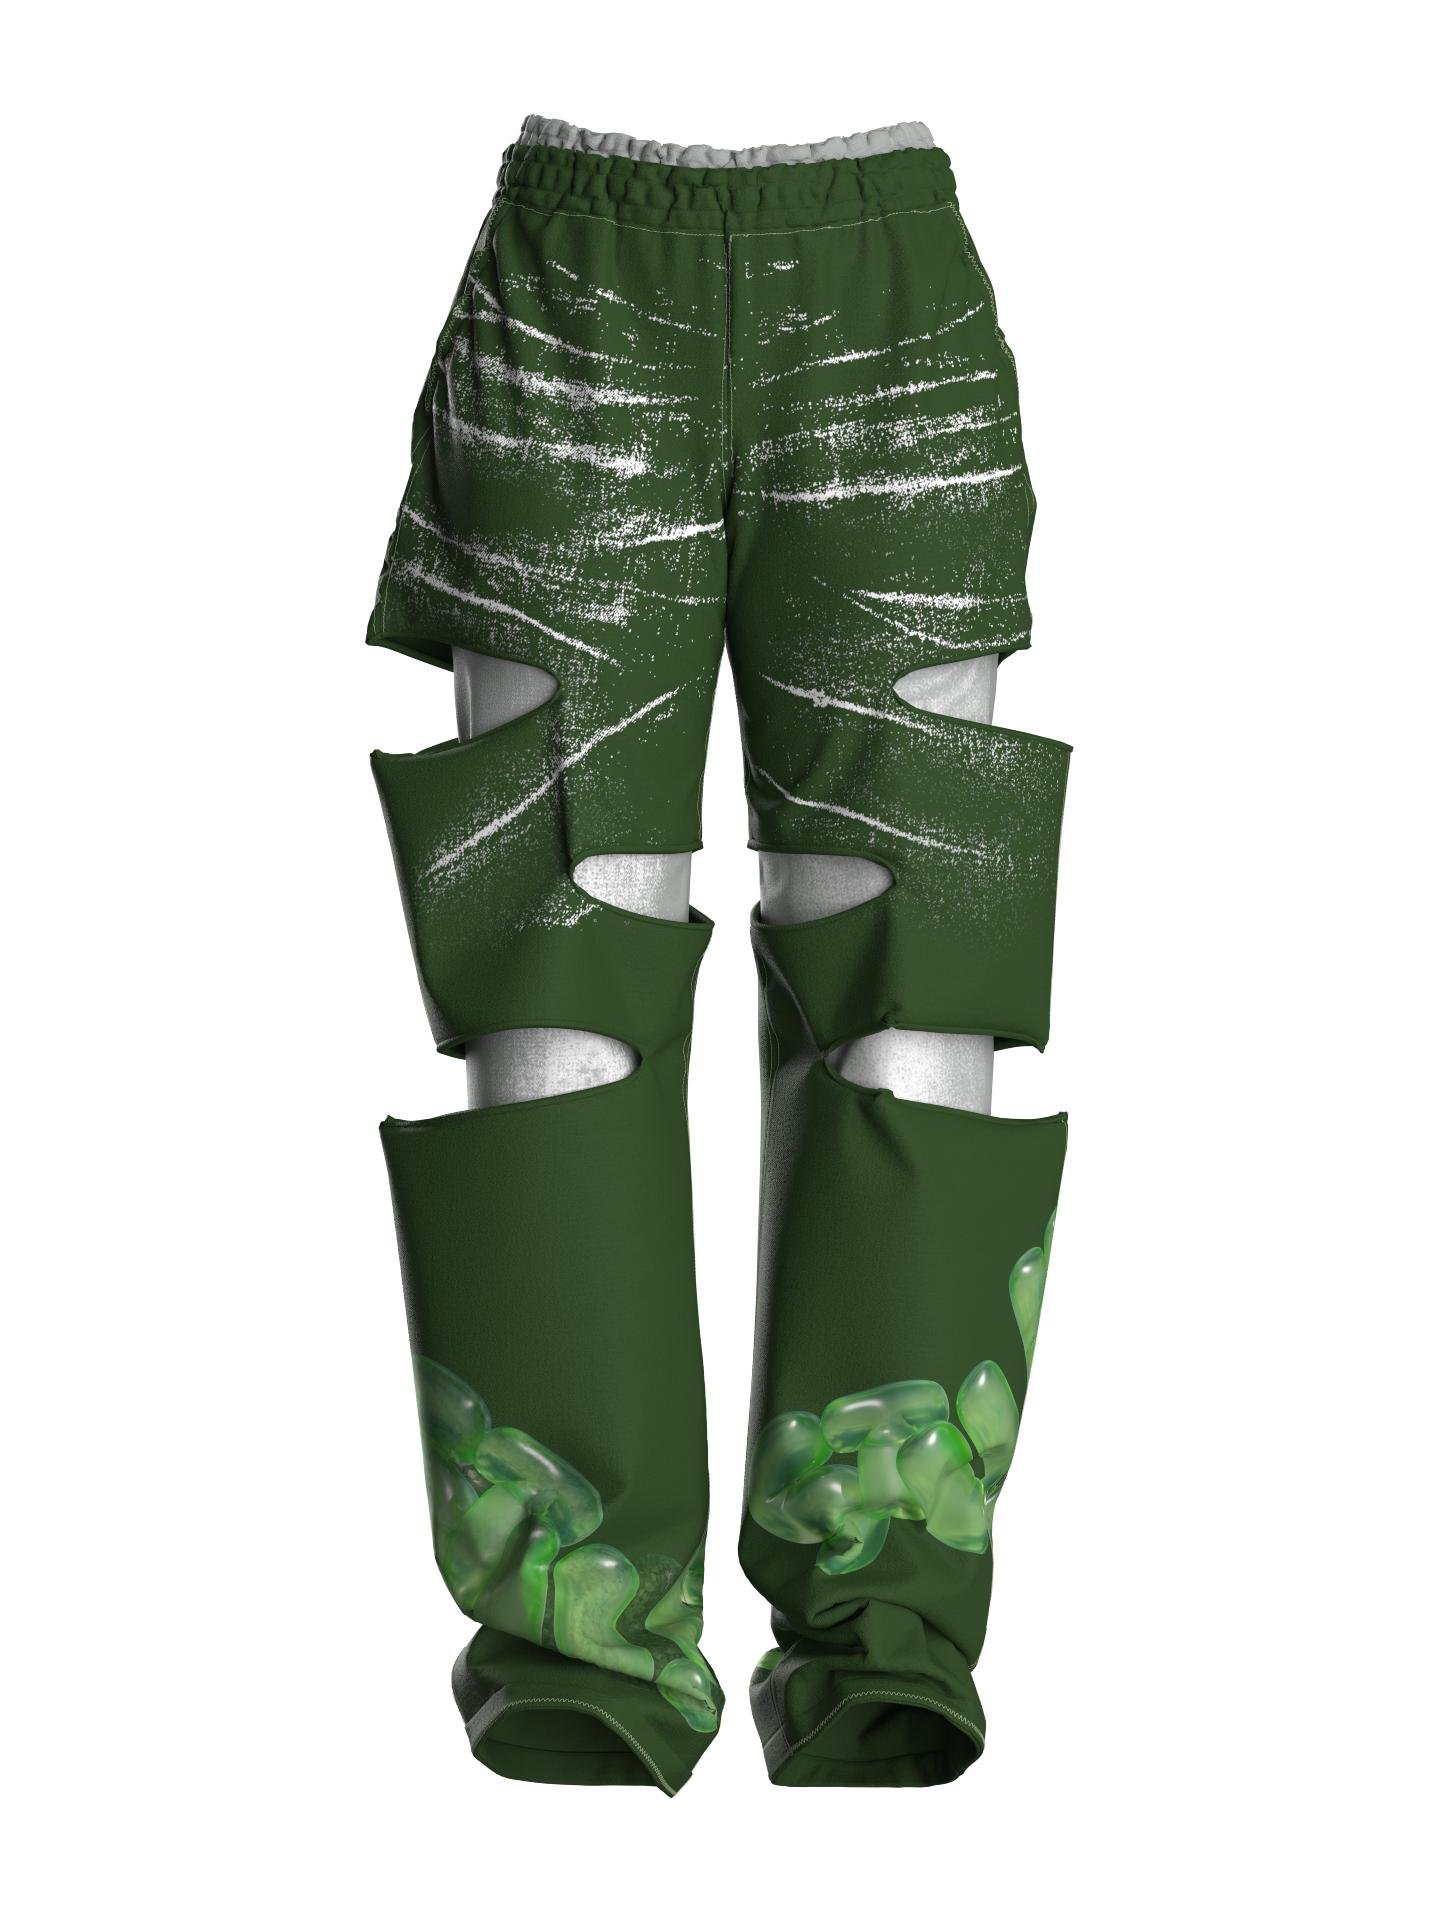 Green grass Cutout Pants by STU.K